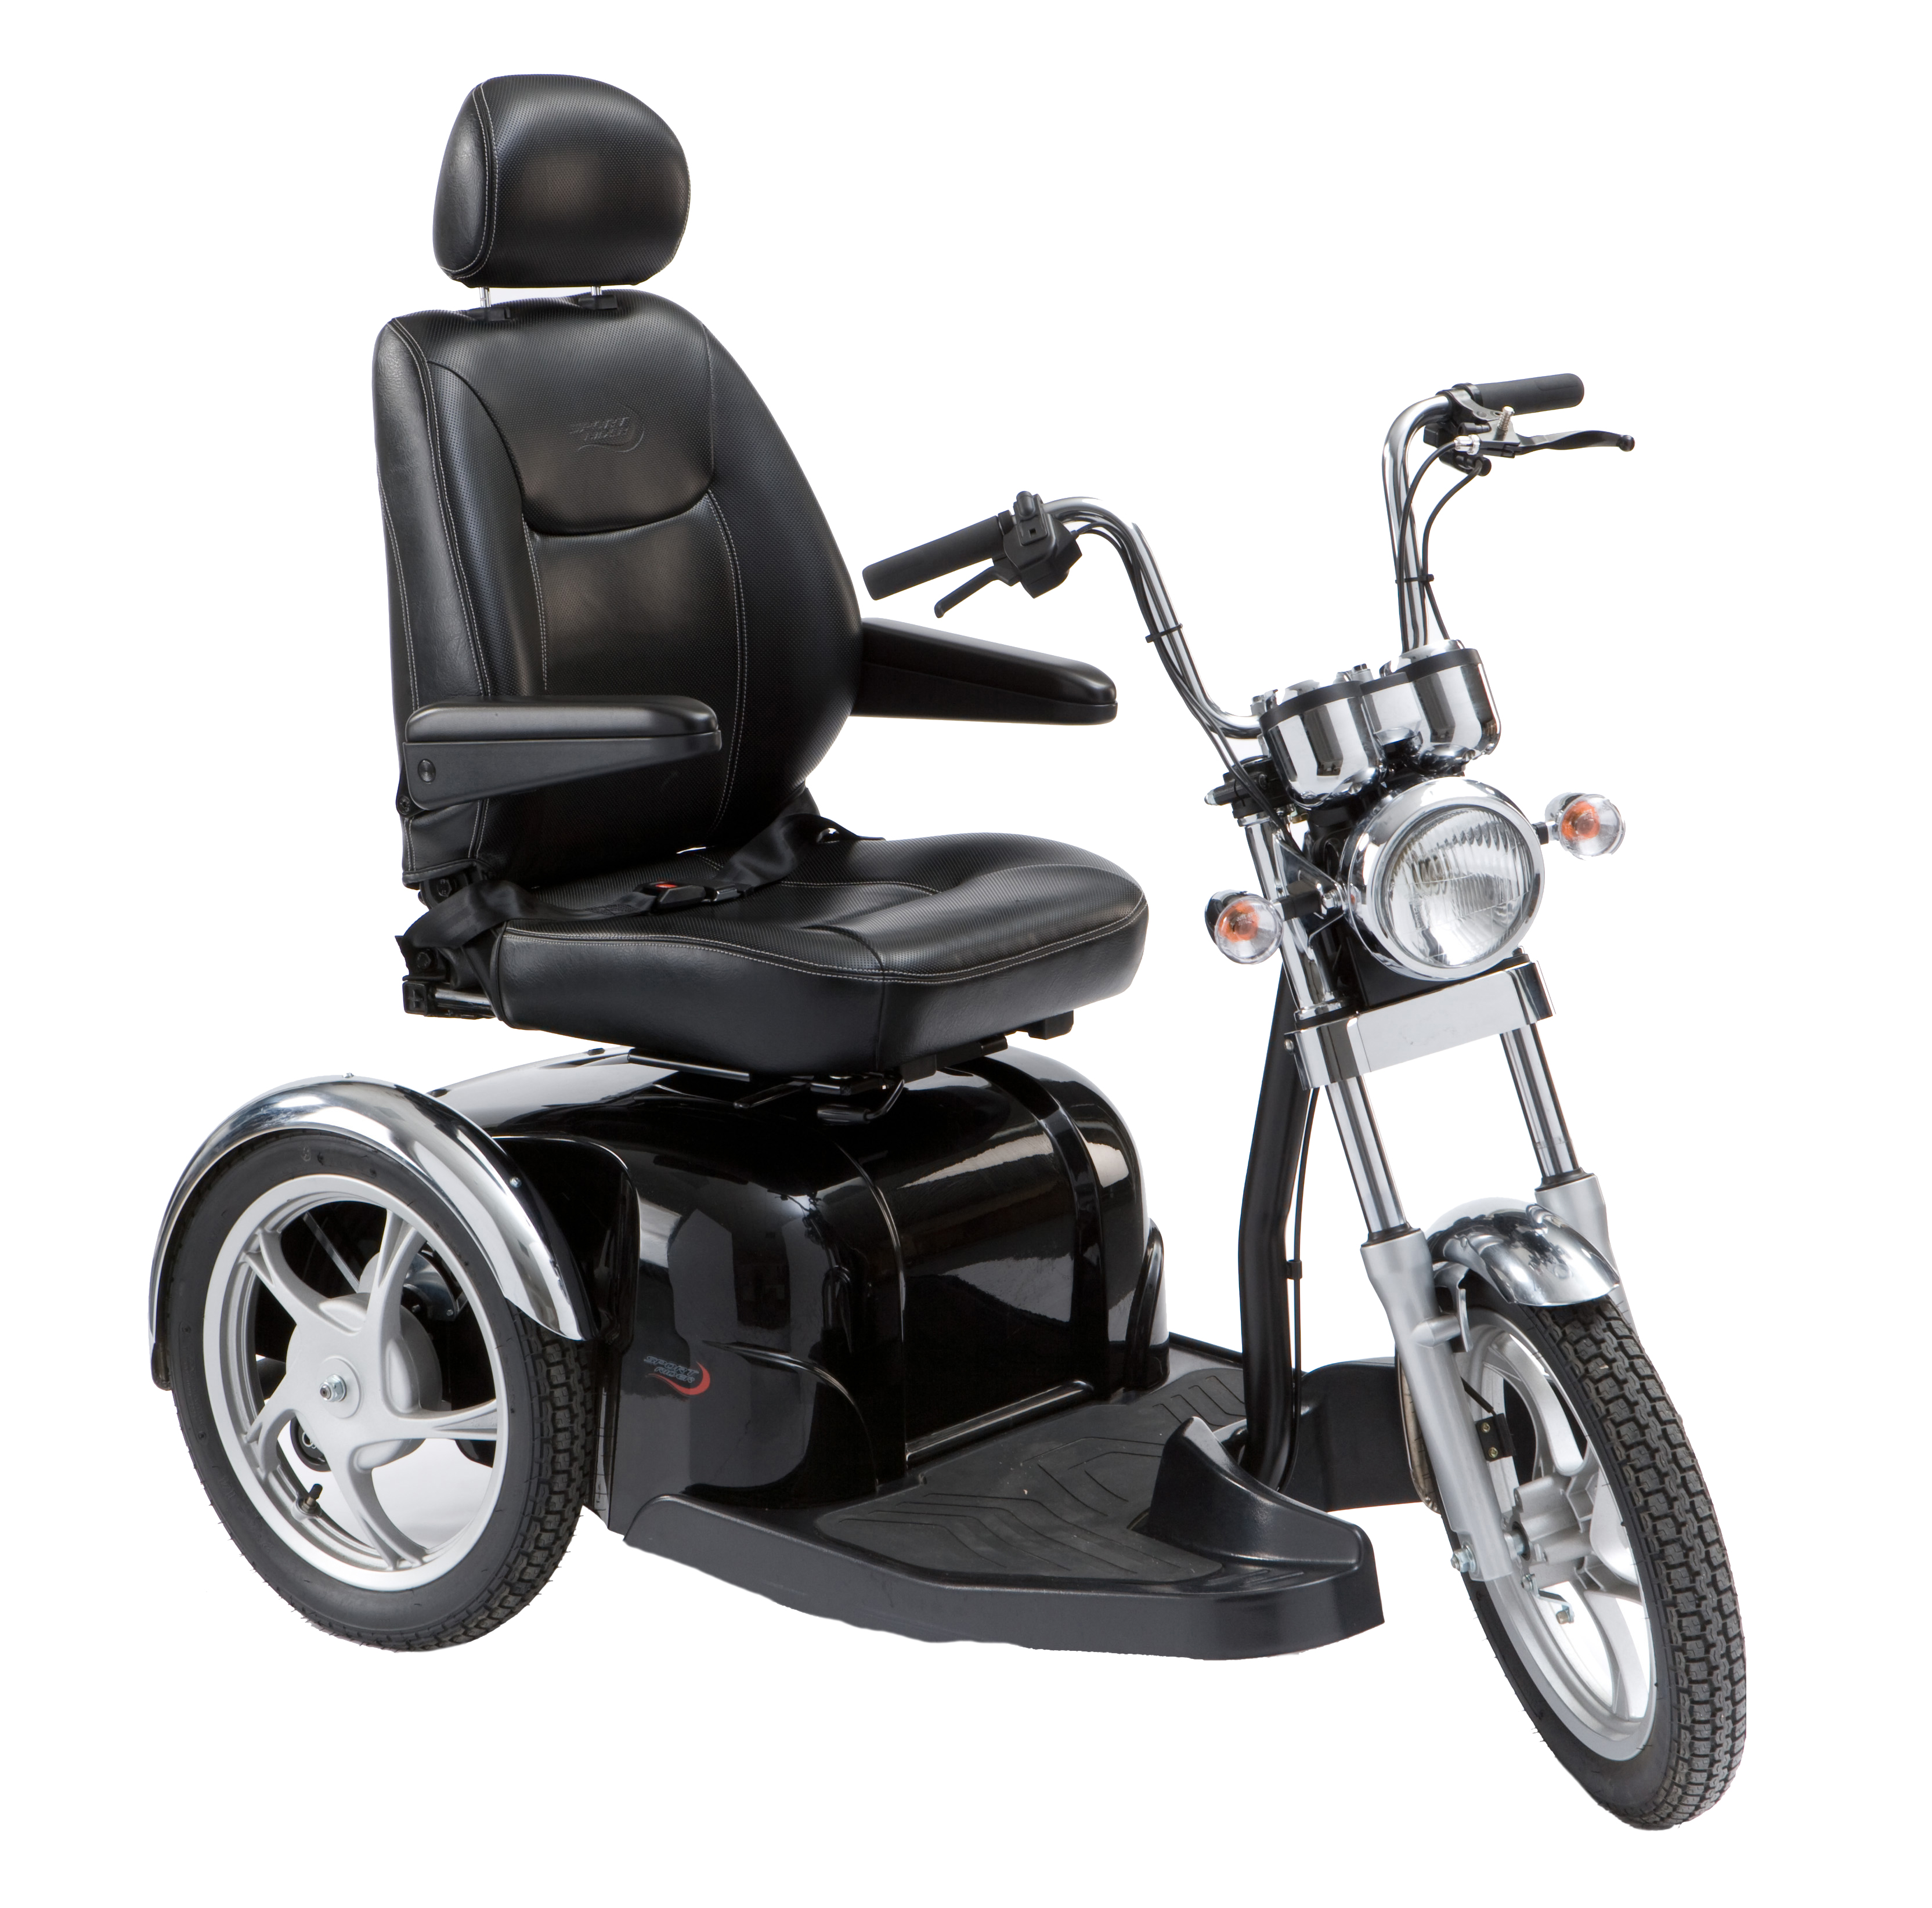 Скутер для инвалидов и пожилых. Скутер для инвалидов МТ-95, кресло-коляска с электроприводом. Скутер для инвалидов МТ-96, кресло-коляска с электроприводом. Кресло коляска скутер MT 100. Drive easy Rider 8mph Luxury Mobility Scooter 3 Wheeled Black.